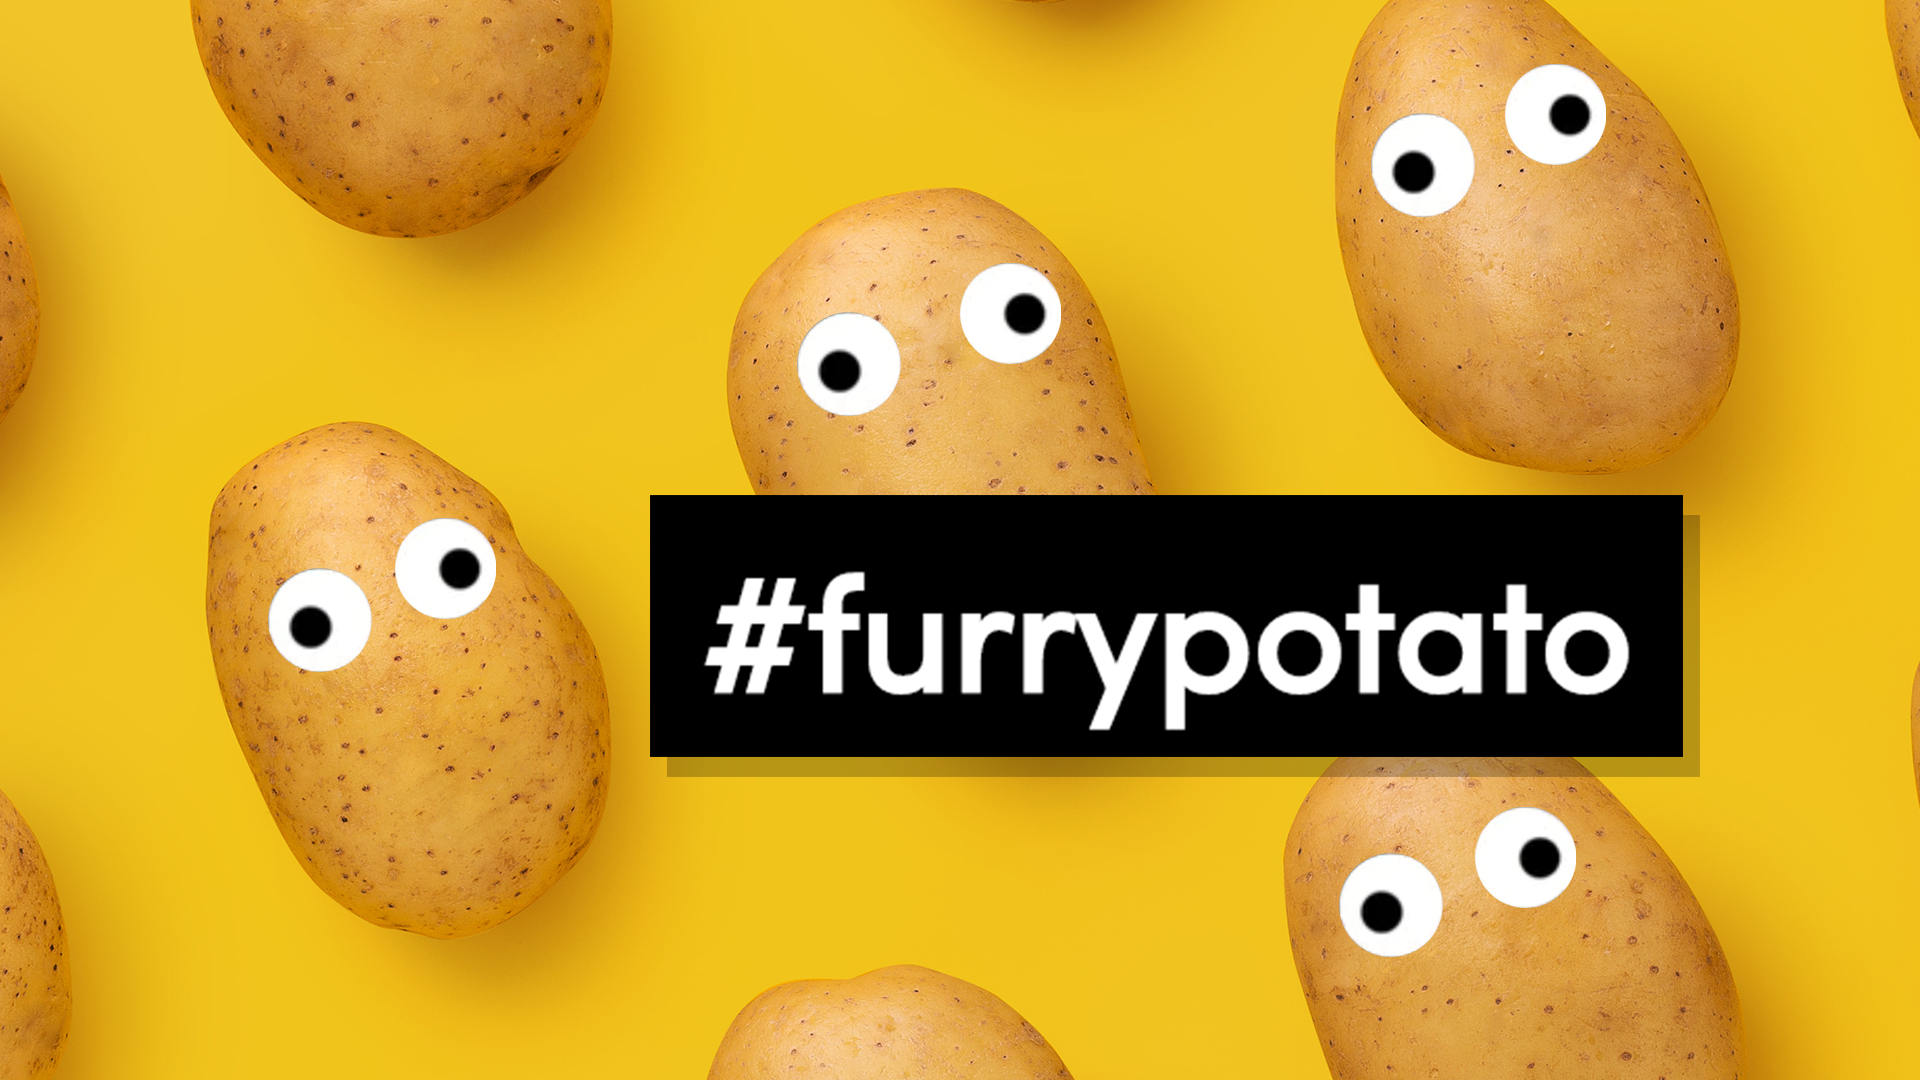 Some potatoes with the hashtag furry potato